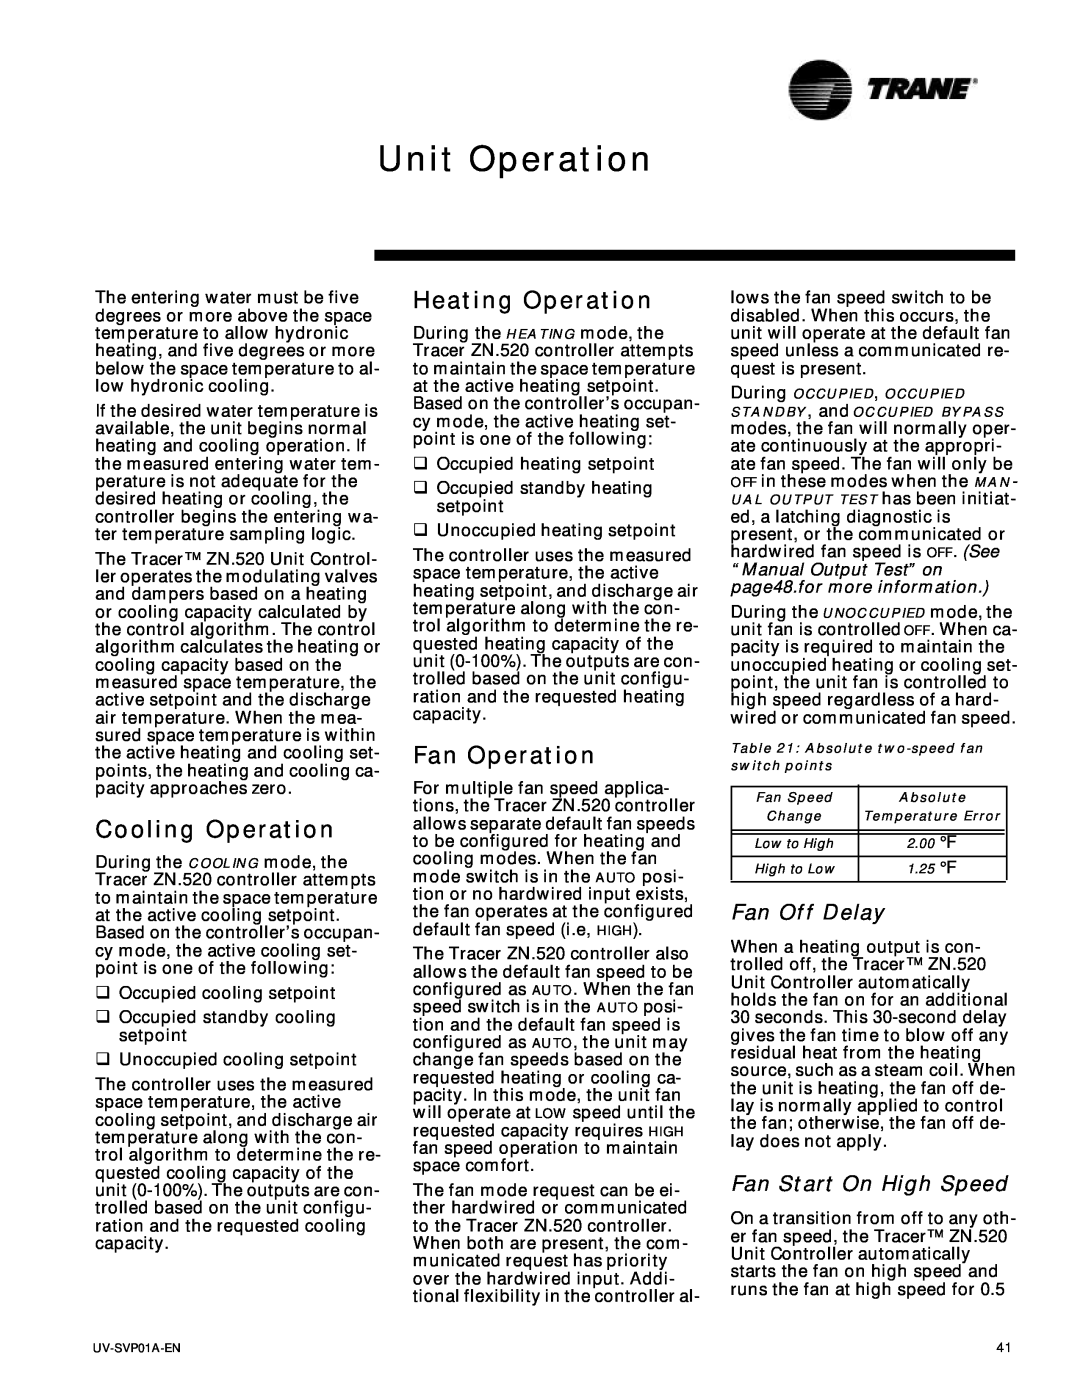 Trane Tracer Unit Ventilator, ZN.520 manual Unit Operation, Cooling Operation, Heating Operation, Fan Operation 